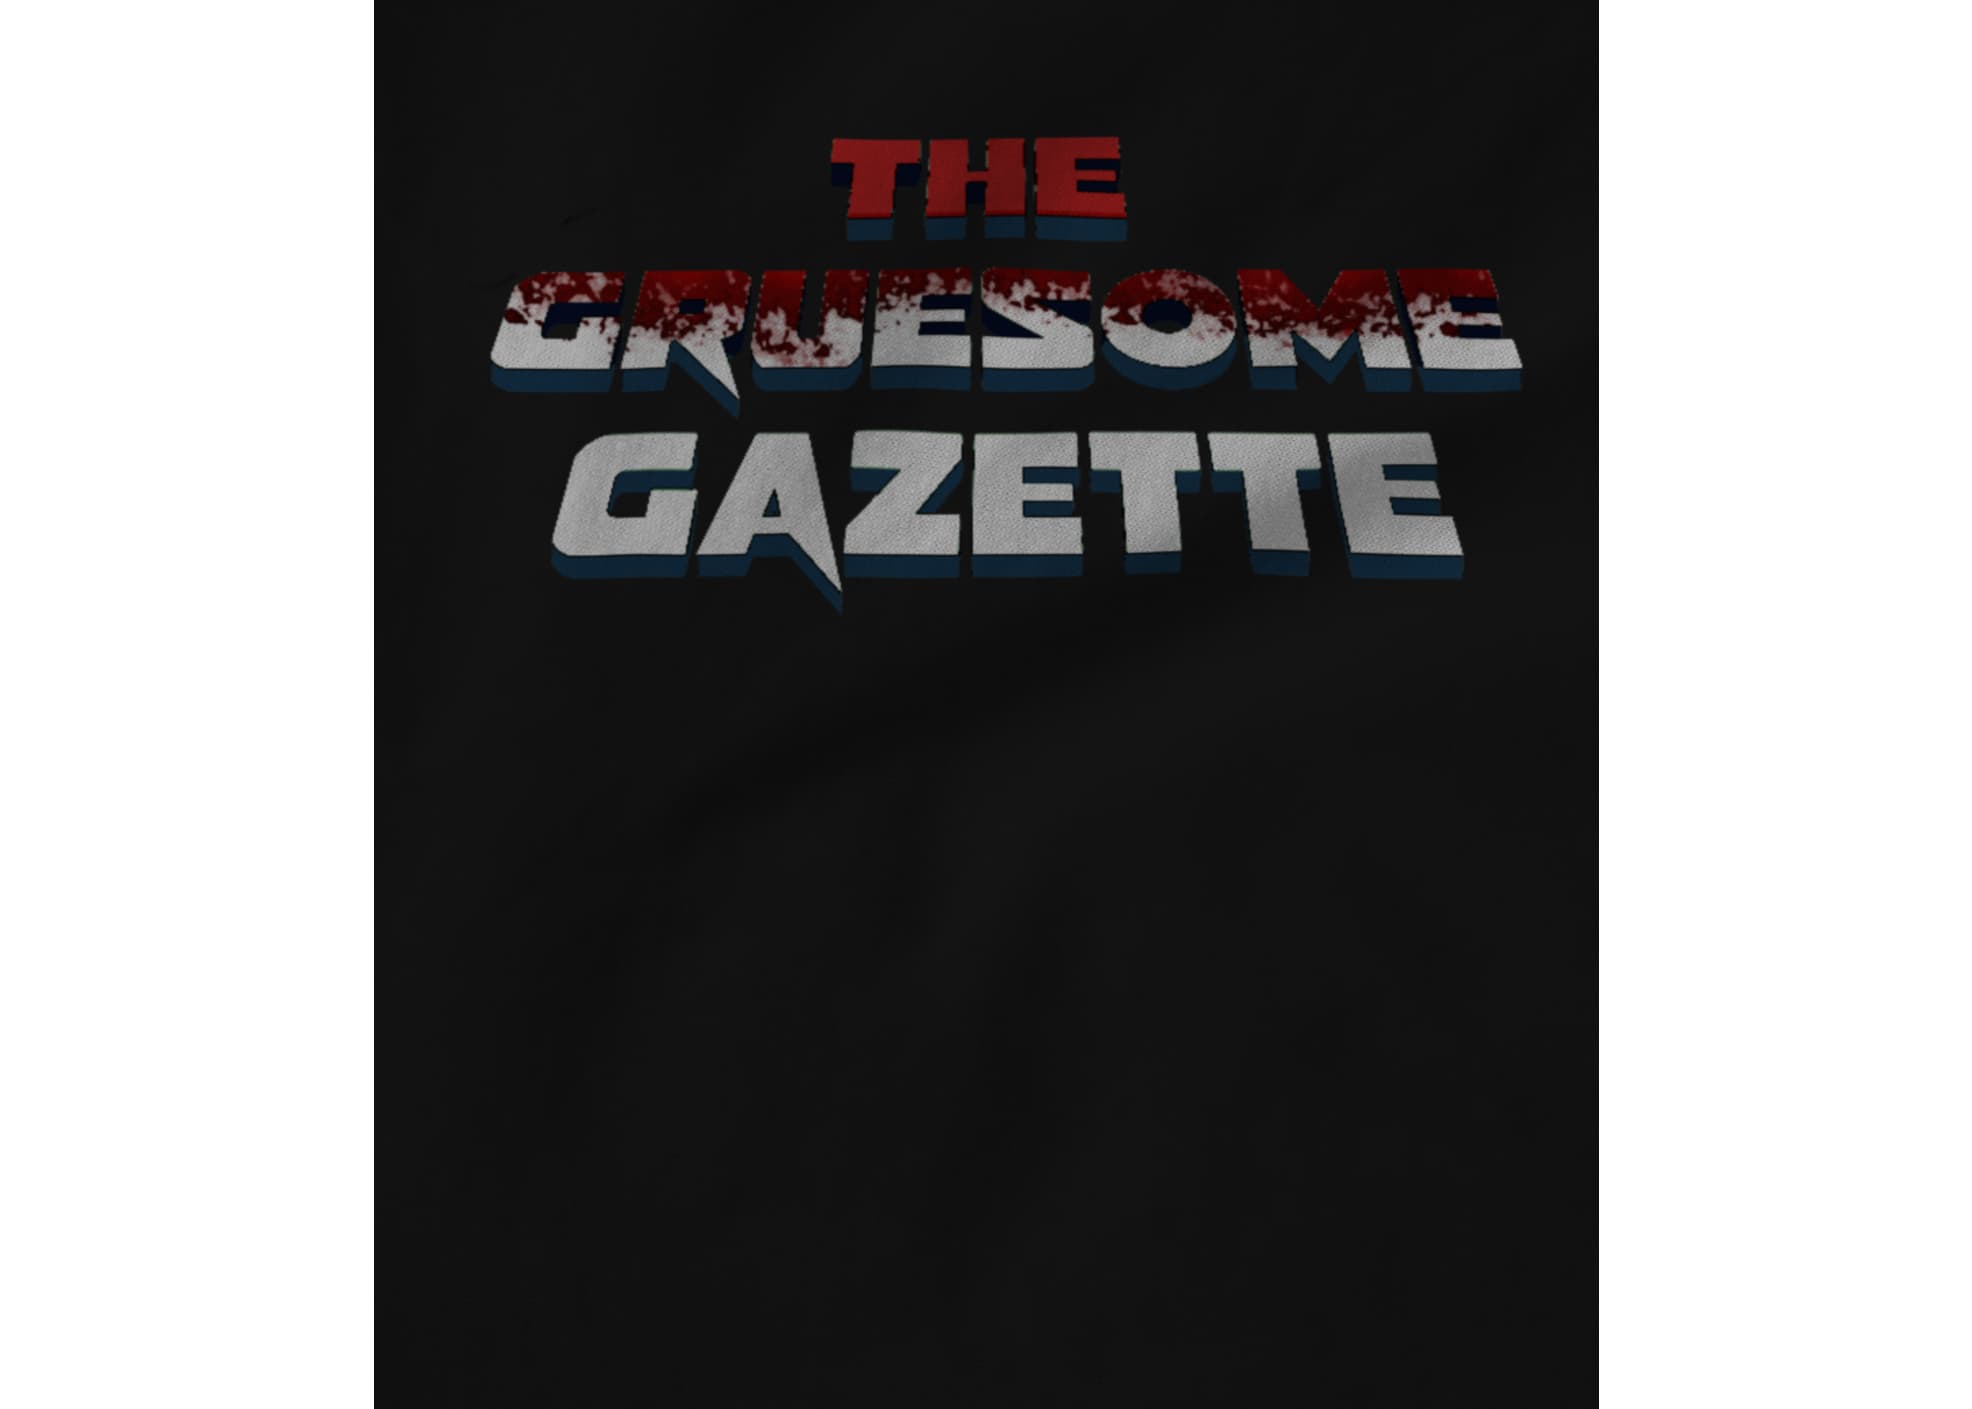 Gruesome gazette logo 1602636248